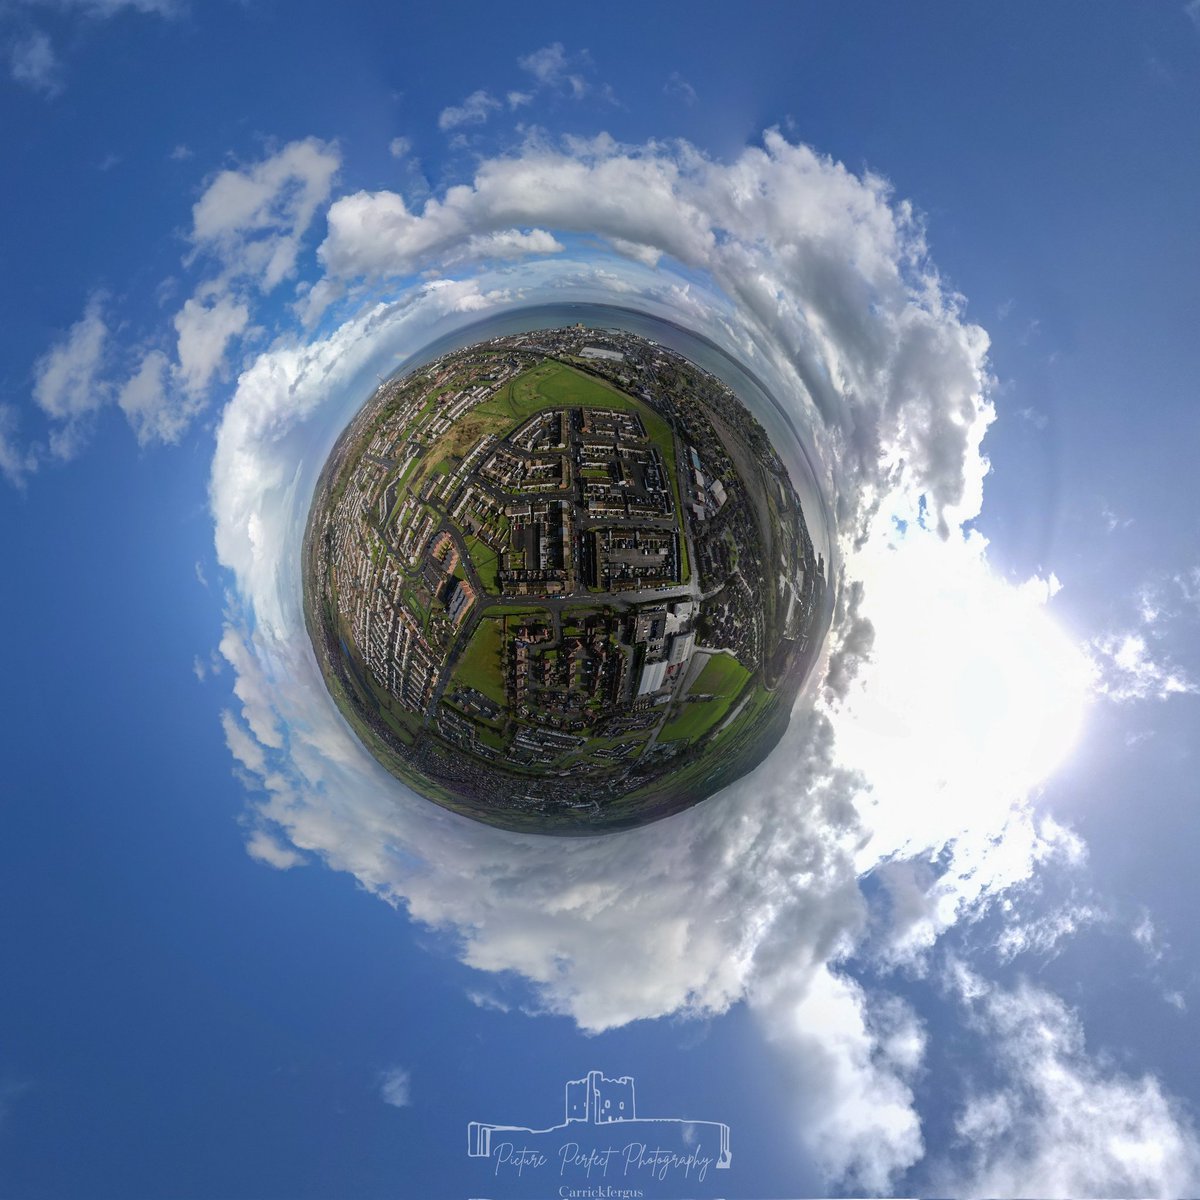 A play around with the drone camera #djımini3pro #dji @djipro @djiglobal #dji3pro #dronephotography #dronelife #dronepilot #drone #aerialphotography #skylovers #skypixel #dronefootage #NorthernIreland #ukdrones @DJIGlobal #carrickfergus #Belfasthour #tweetni #mytinyplanet